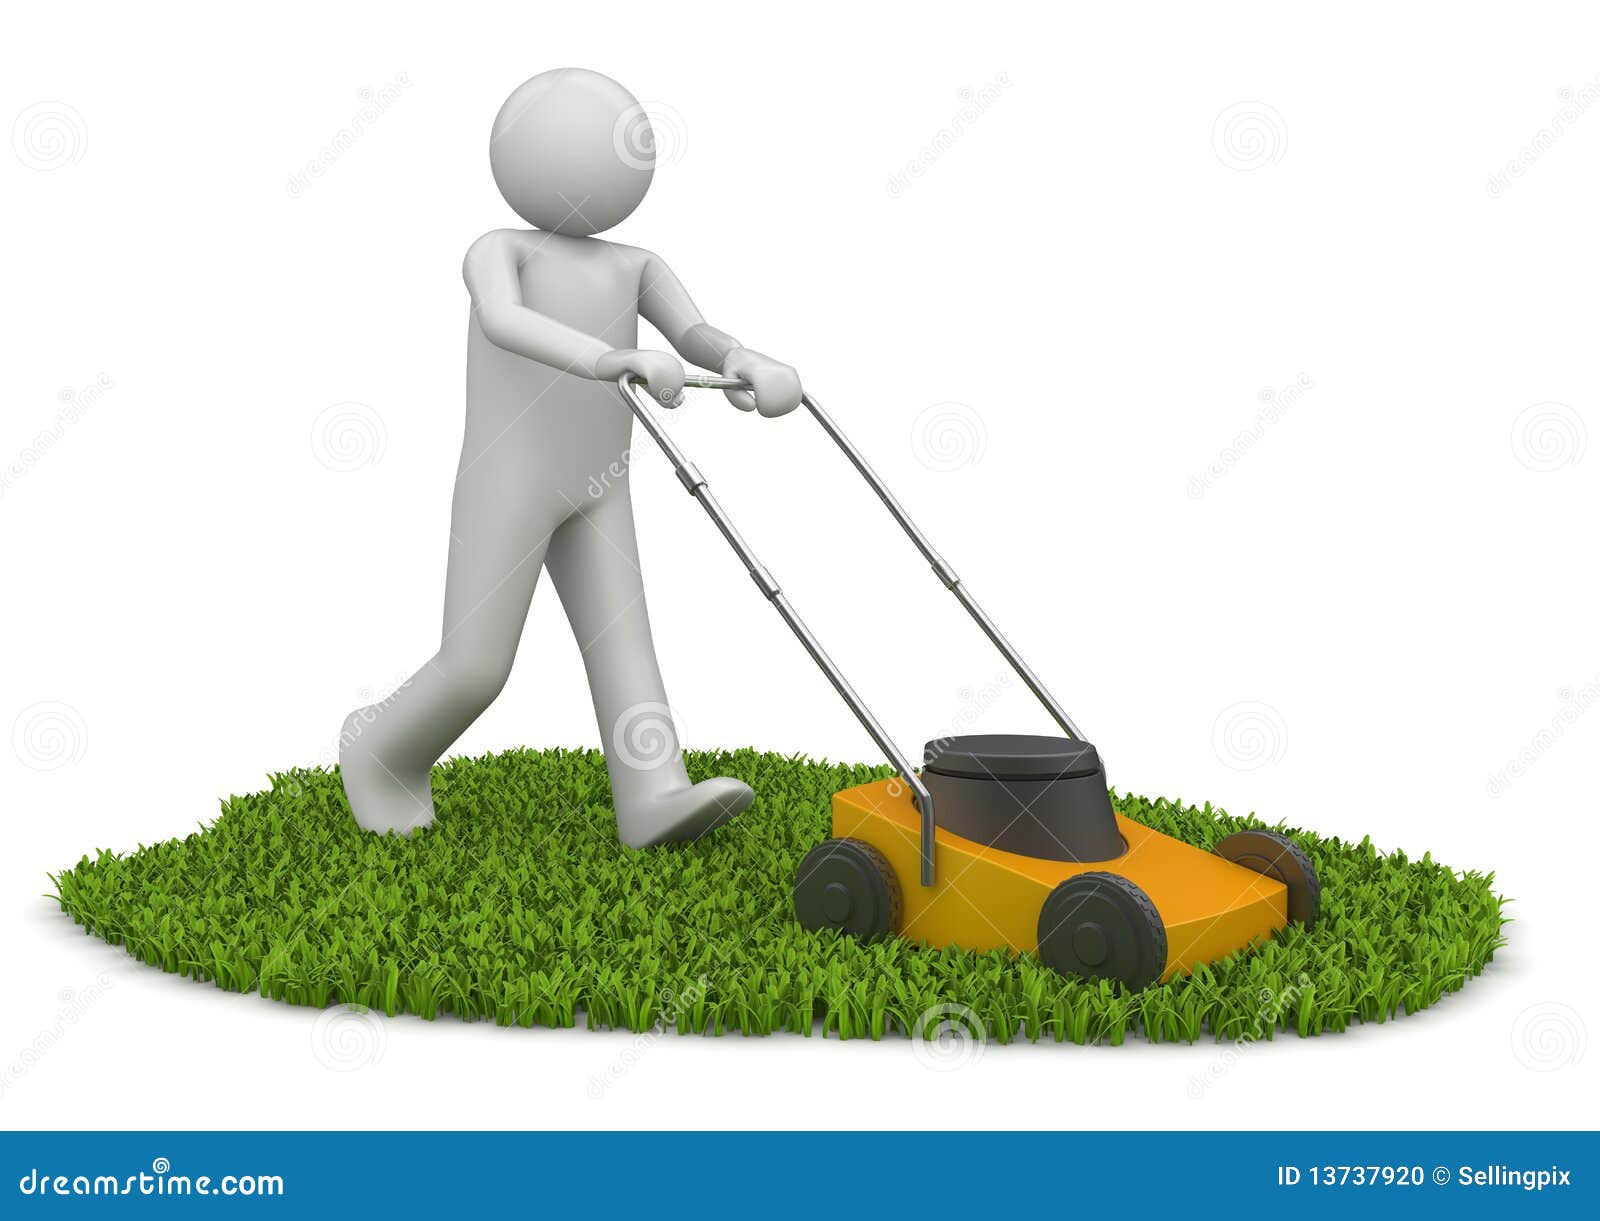 clipart lawnmower man - photo #22